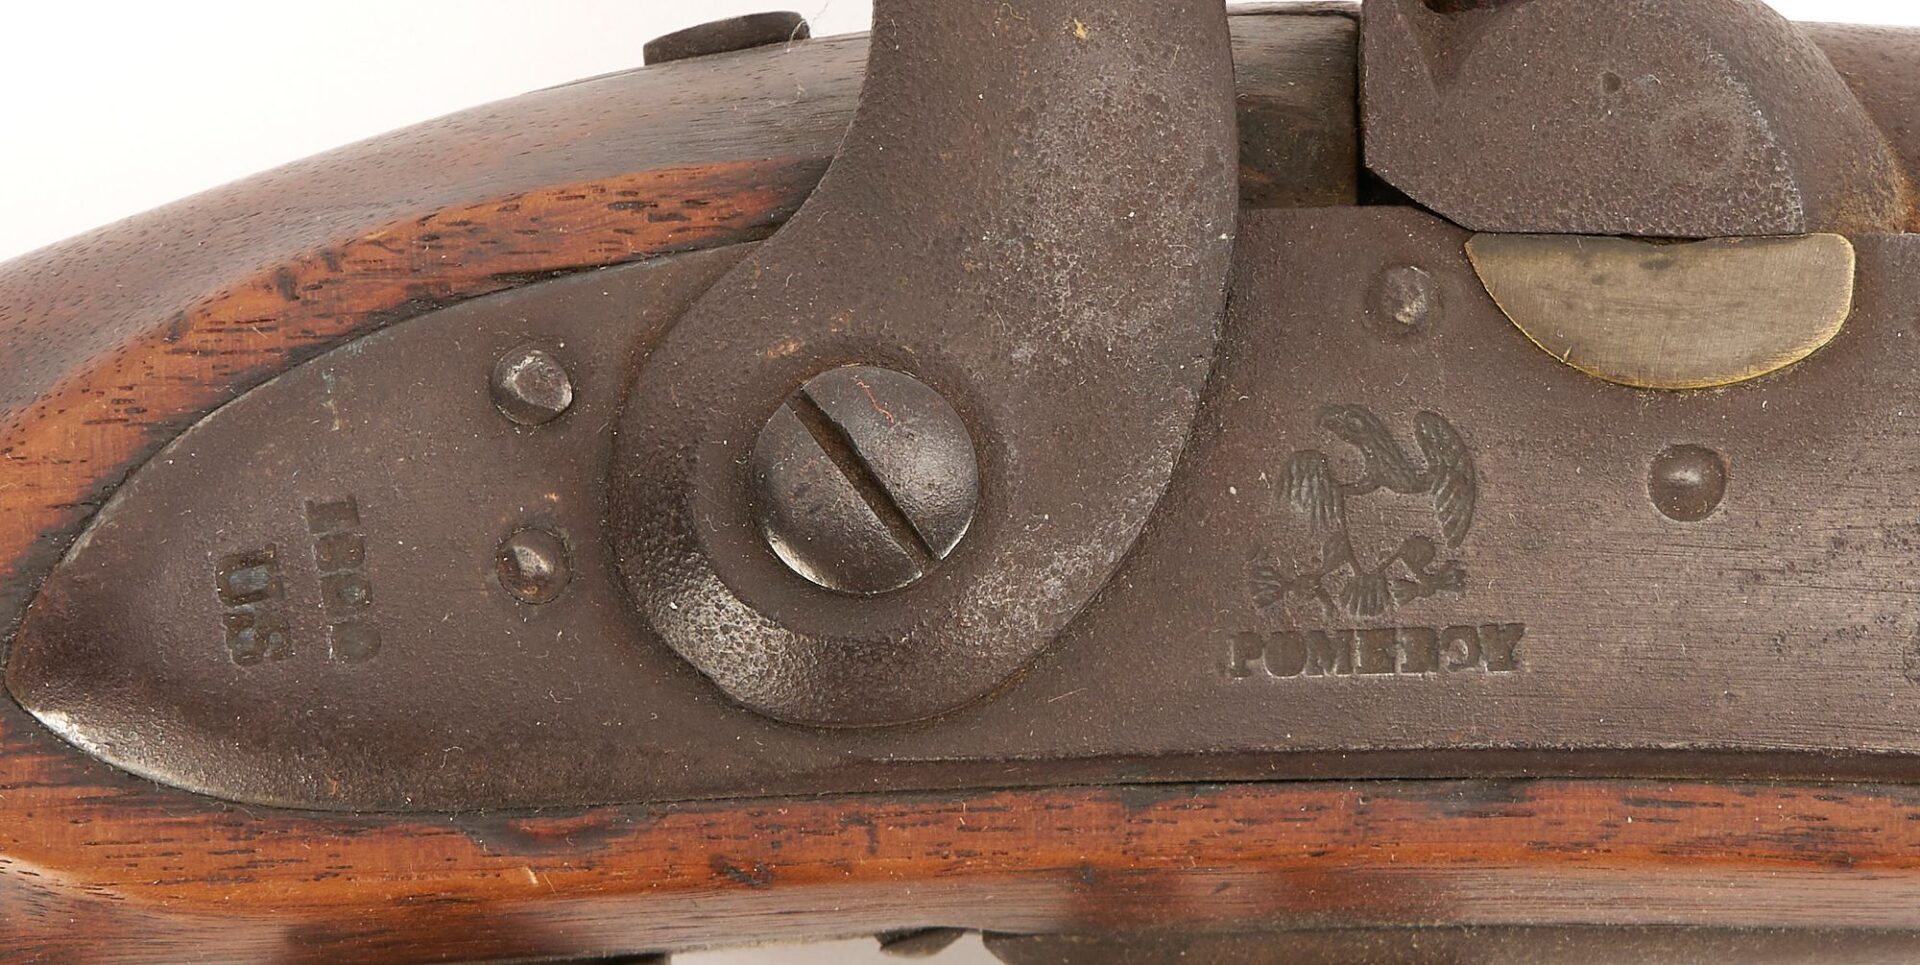 Lot 546: Pomeroy Model 1816 Musket, Percussion Conversion, w/ Bayonet